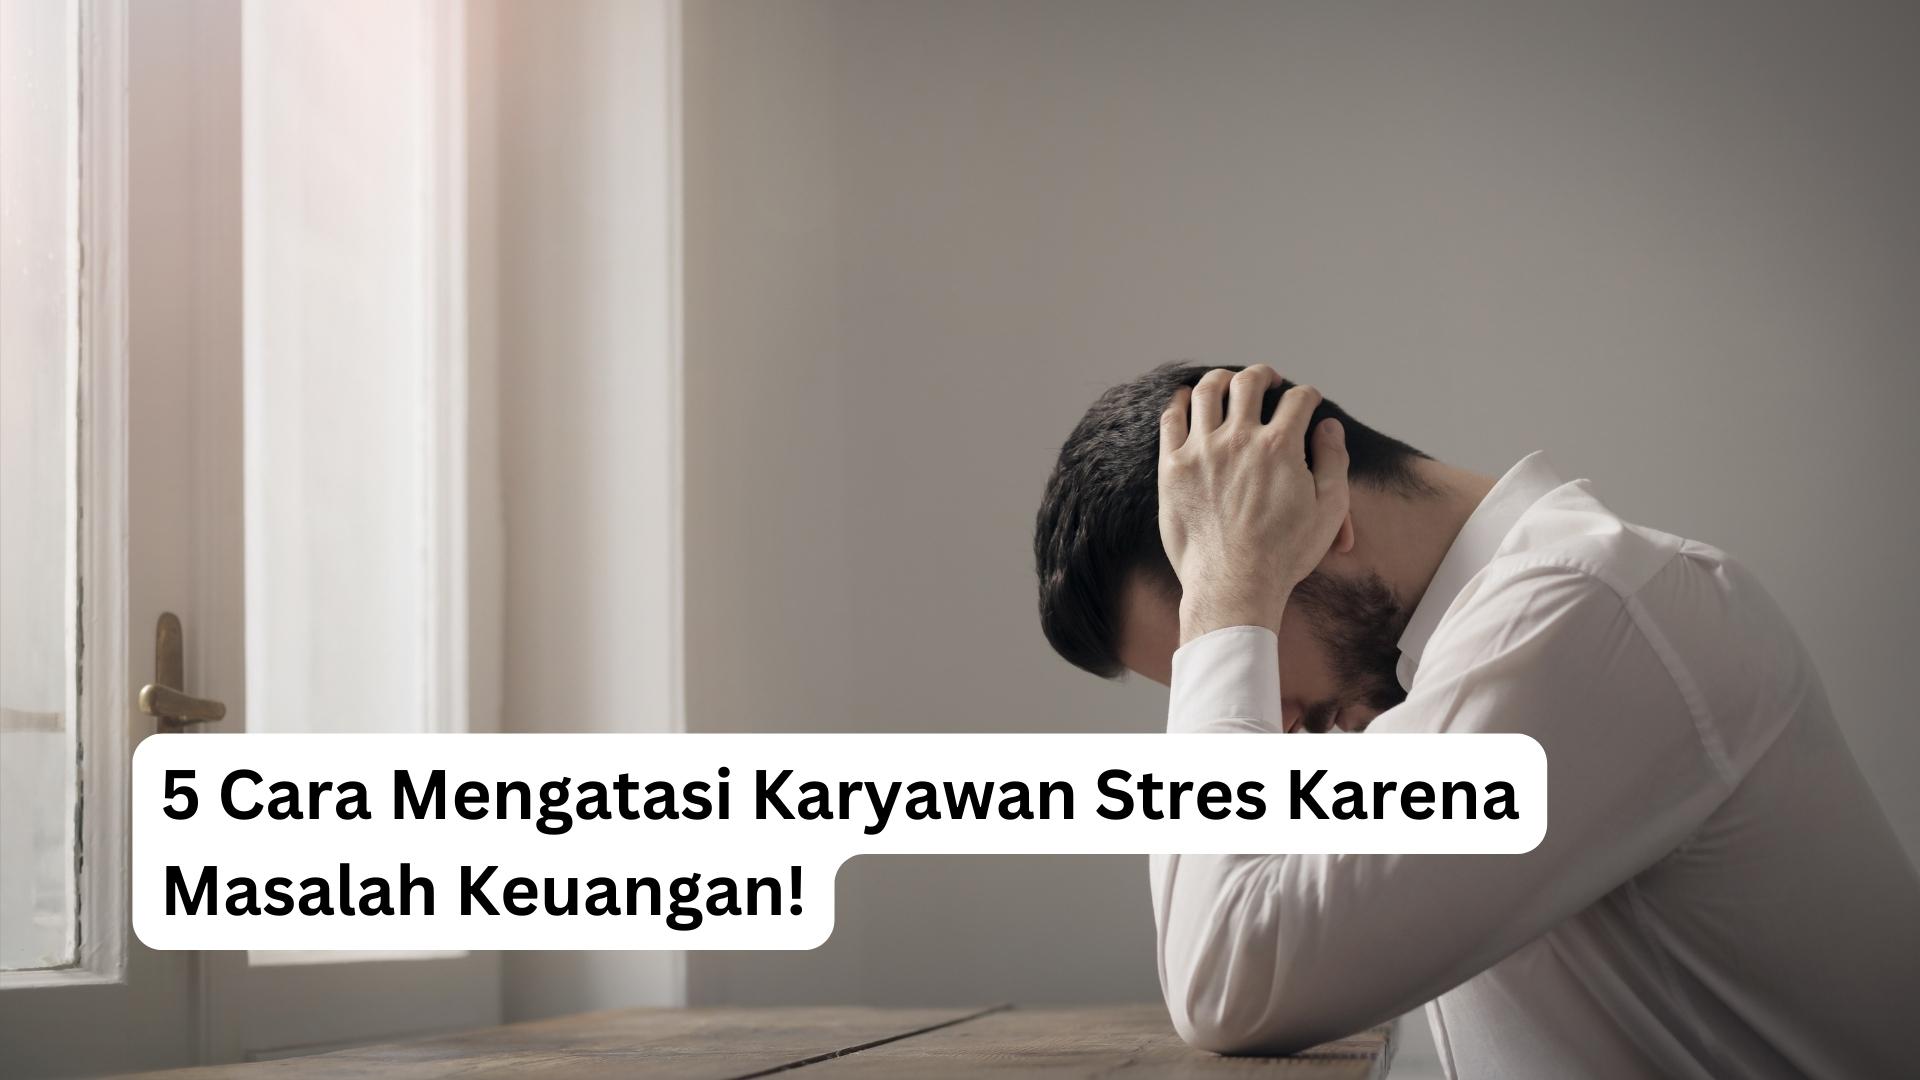 You are currently viewing 5 Cara Mengatasi Karyawan Stres Karena Masalah Keuangan!